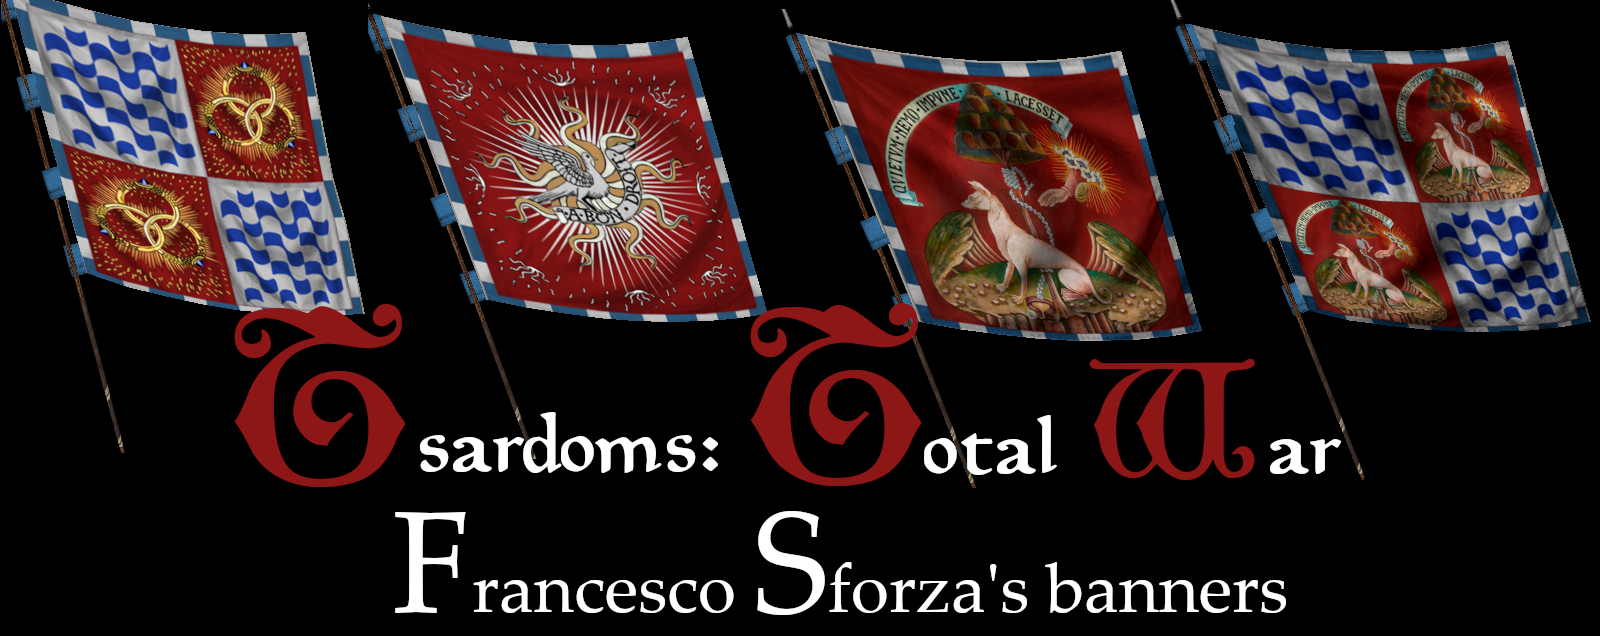 sforza banners